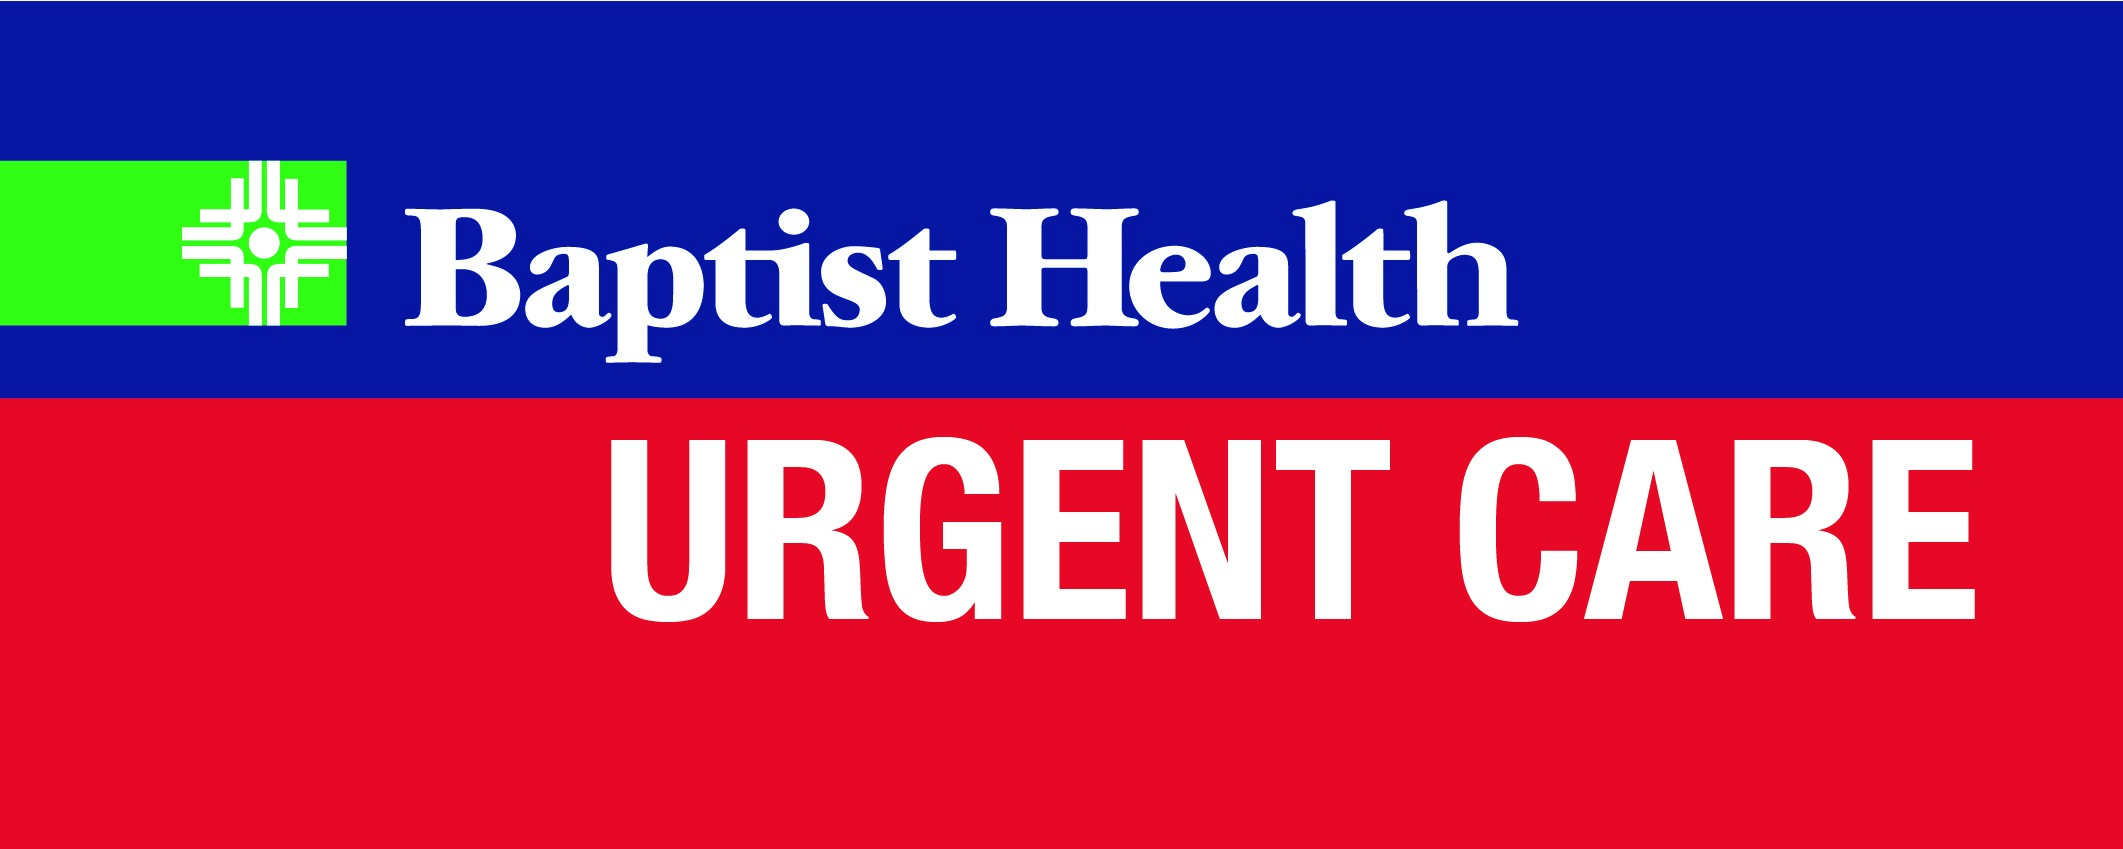 Baptist Health Urgent Care - Little Rock (W. Markham St.) Logo